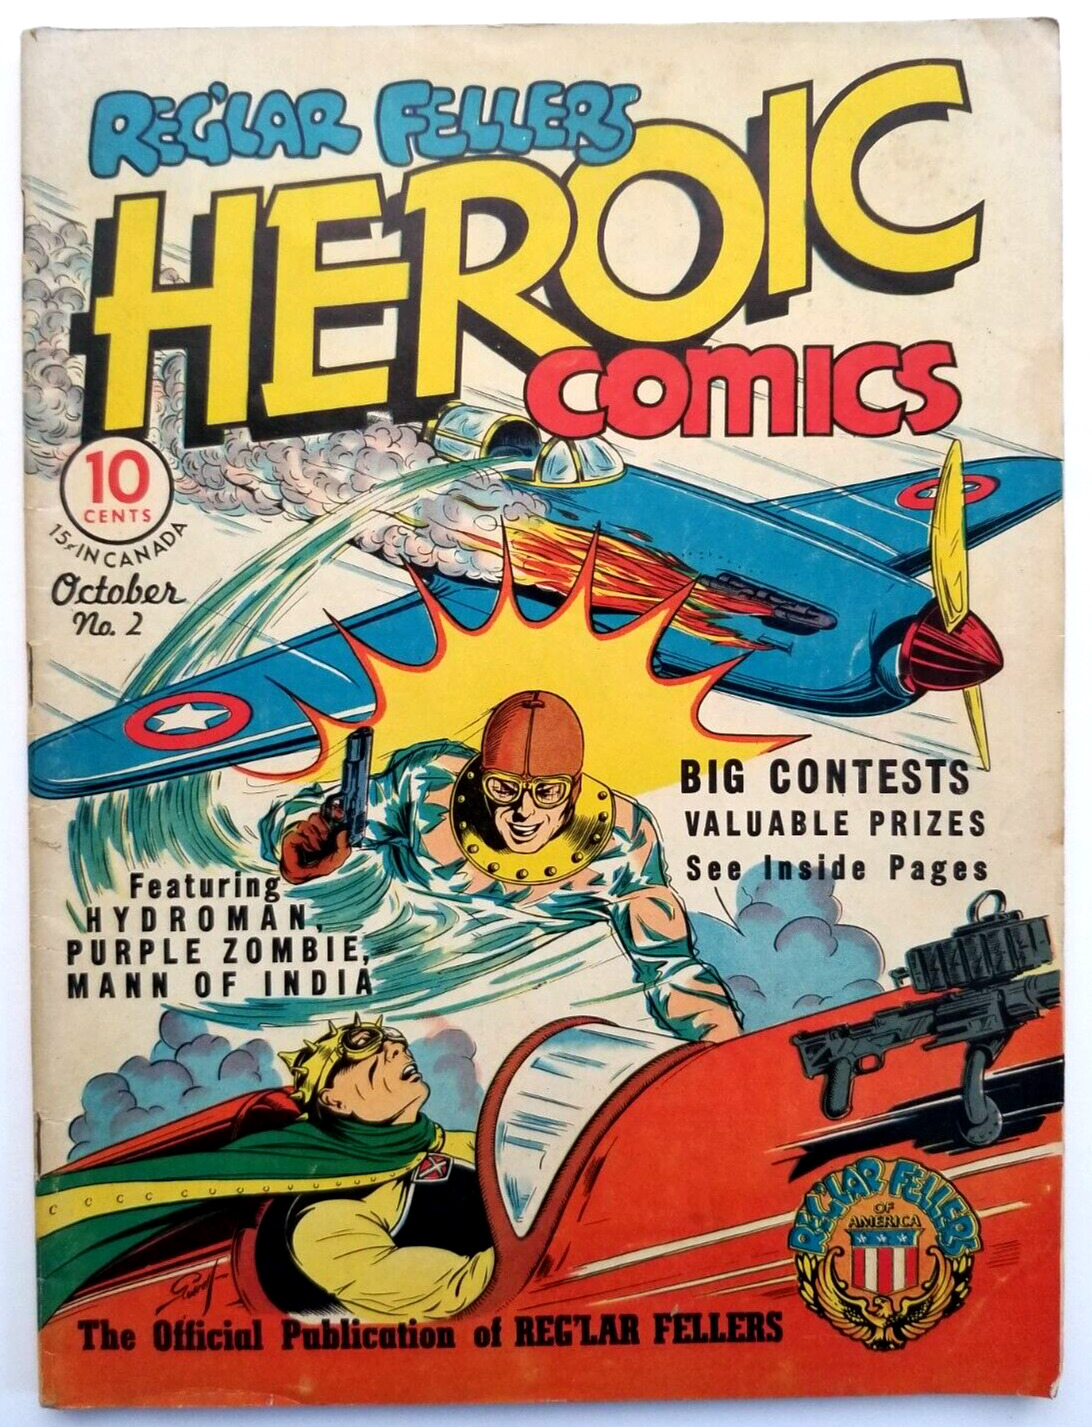 HEROIC COMICS #2 VG+ 4.5 EASTERN COLOR 1940 CLASSIC BILL EVERETT COVER